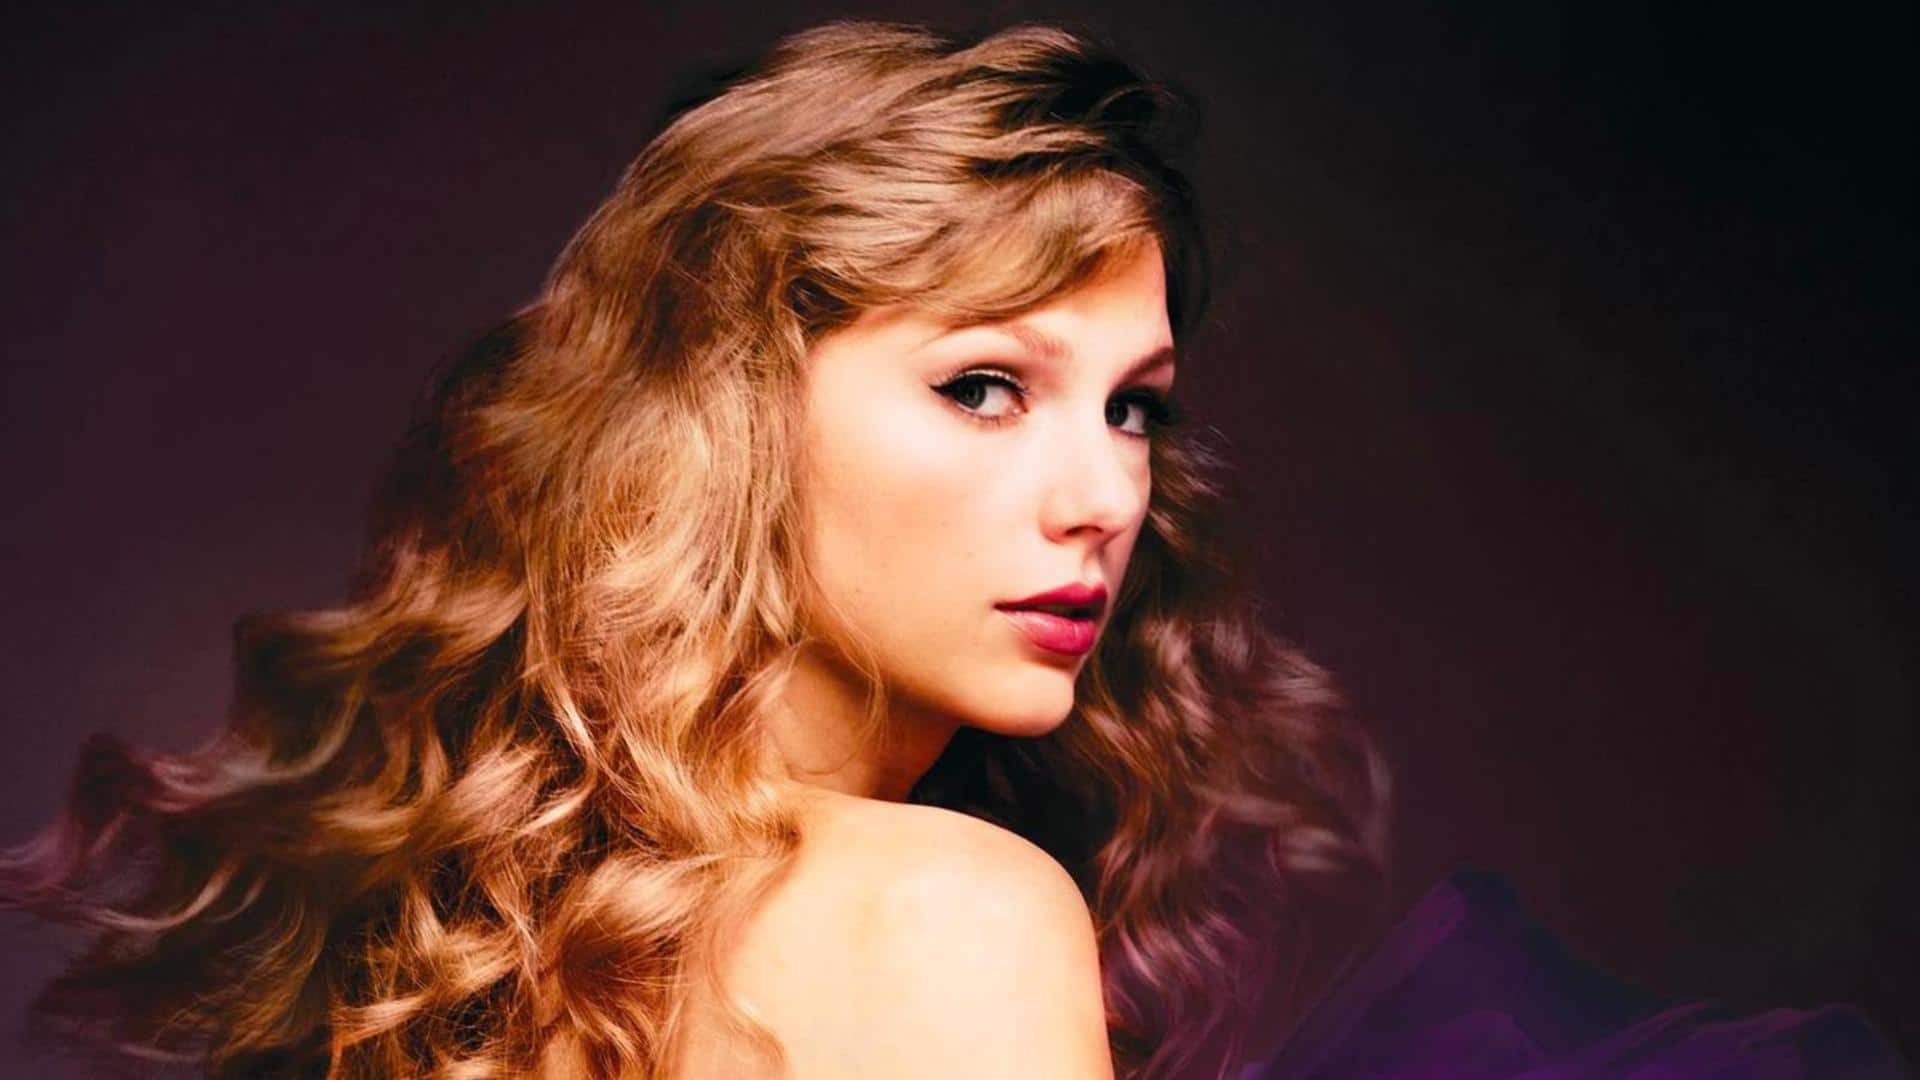 Taylor Swift announces 'Speak Now' as next re-recorded album